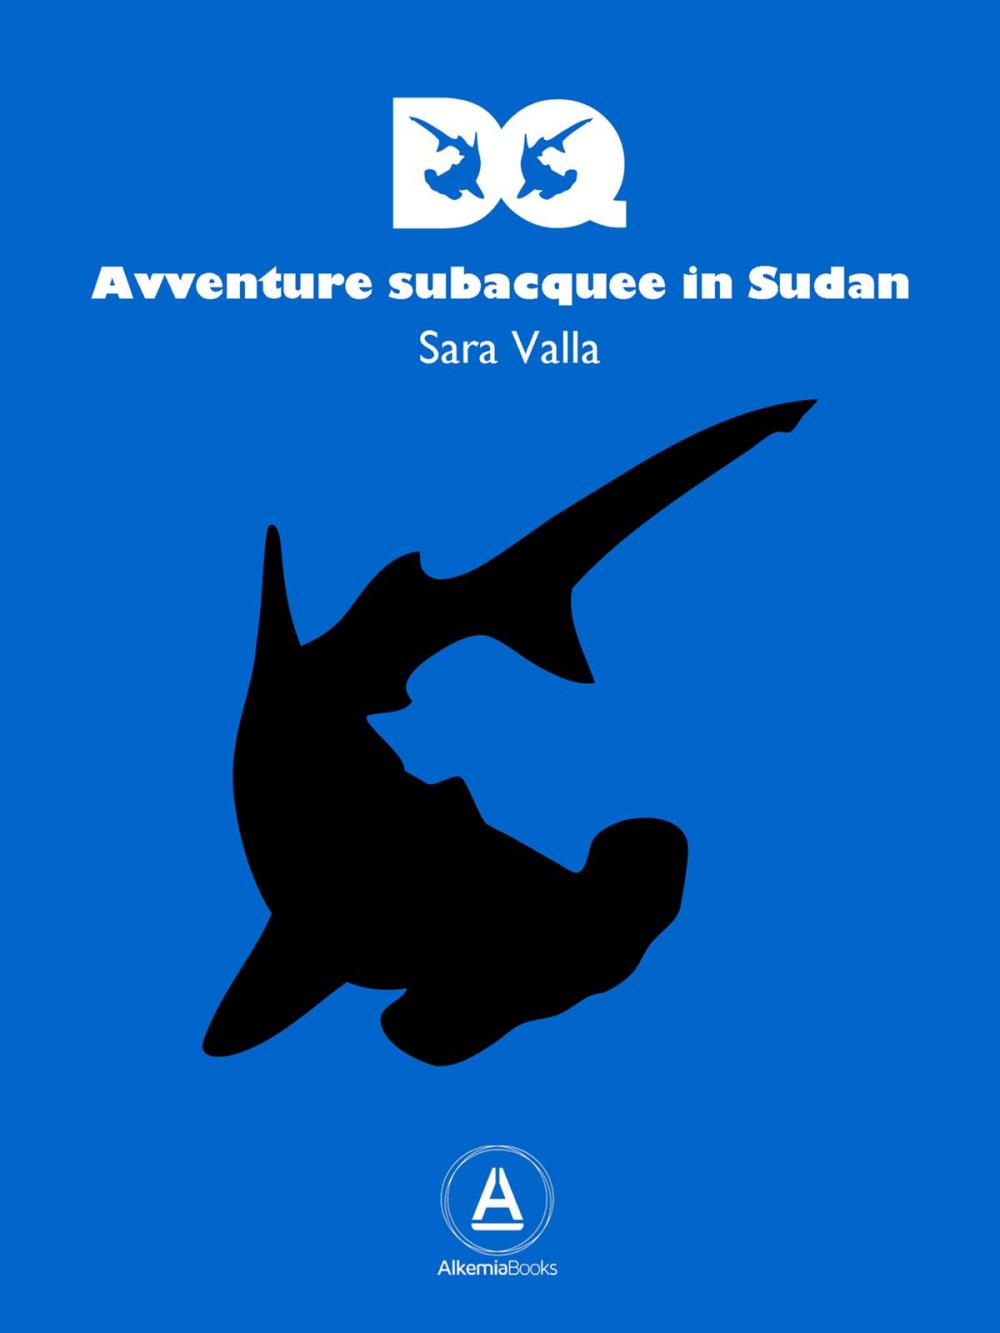 Big bigCover of DQ Avventure subacquee in Sudan